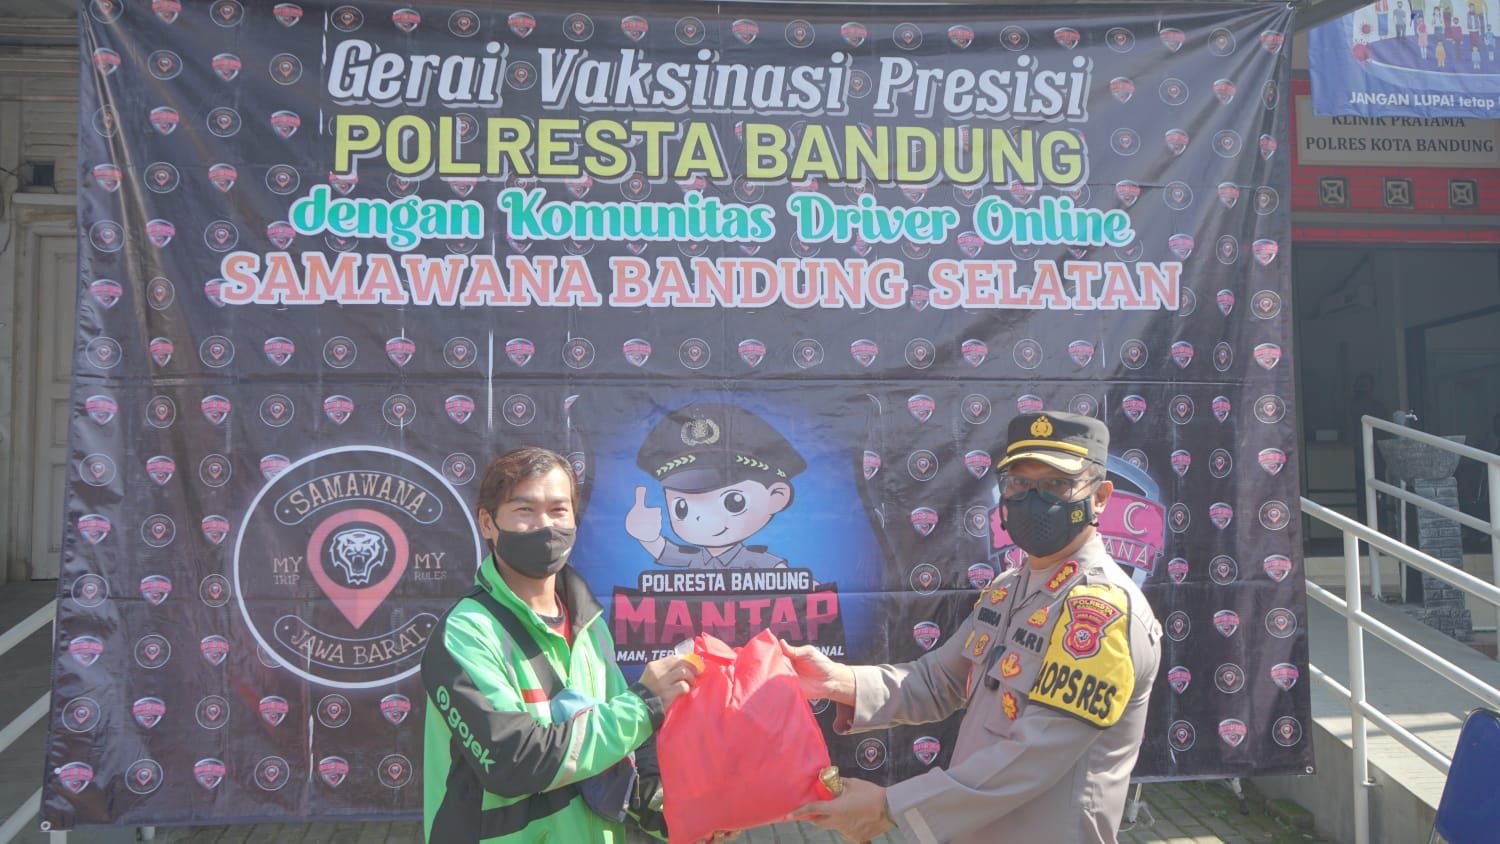 Vaksinasi Covid-19 dan pembagian paket sembako yang diadakan Polresta Bandung, Rabu 28 Juli 2021